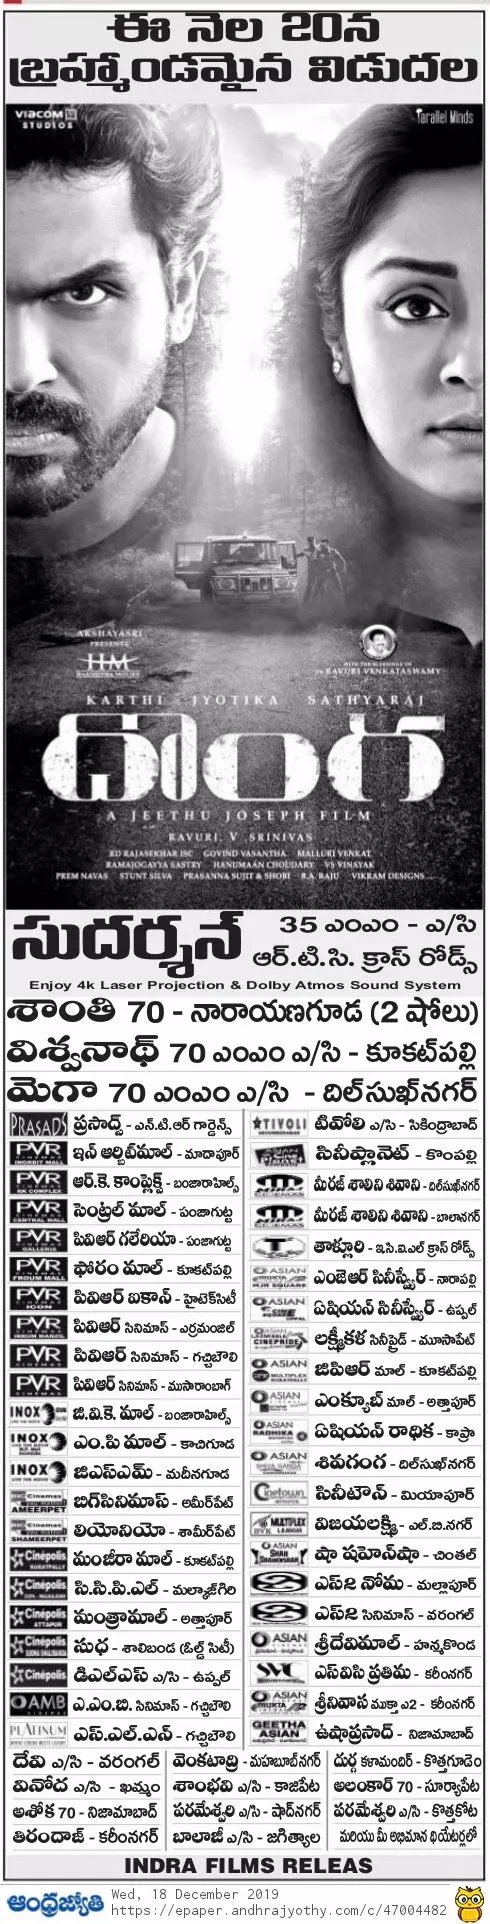 Karthi’s Donga Hyderabad And Nizam Theaters List